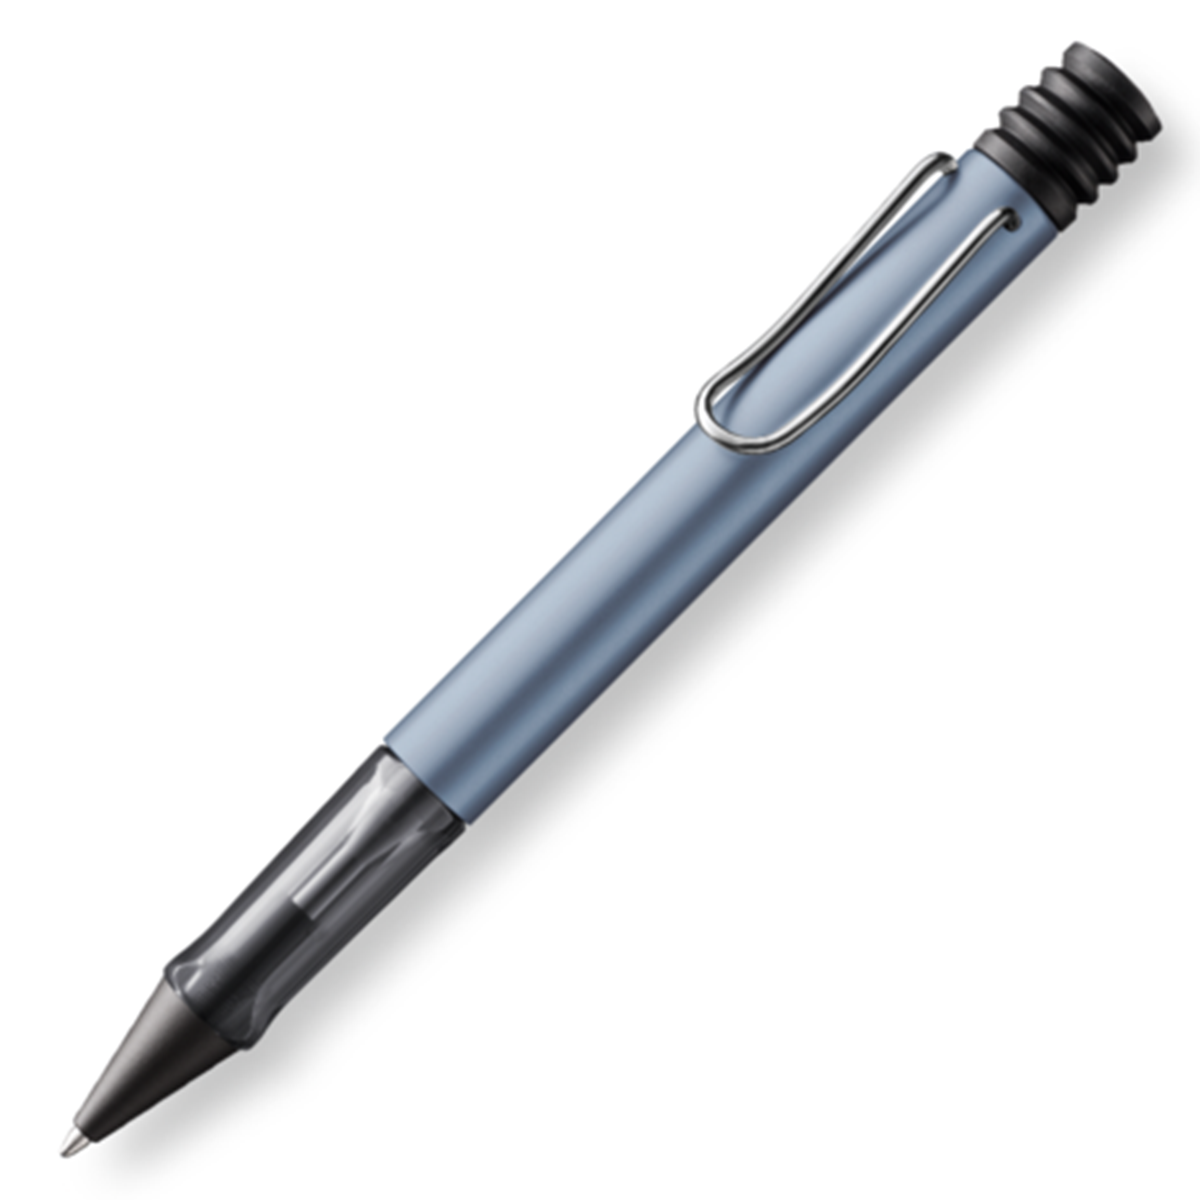 AL-star Ballpoint Azure in the group Pens / Fine Writing / Ballpoint Pens at Pen Store (125530)